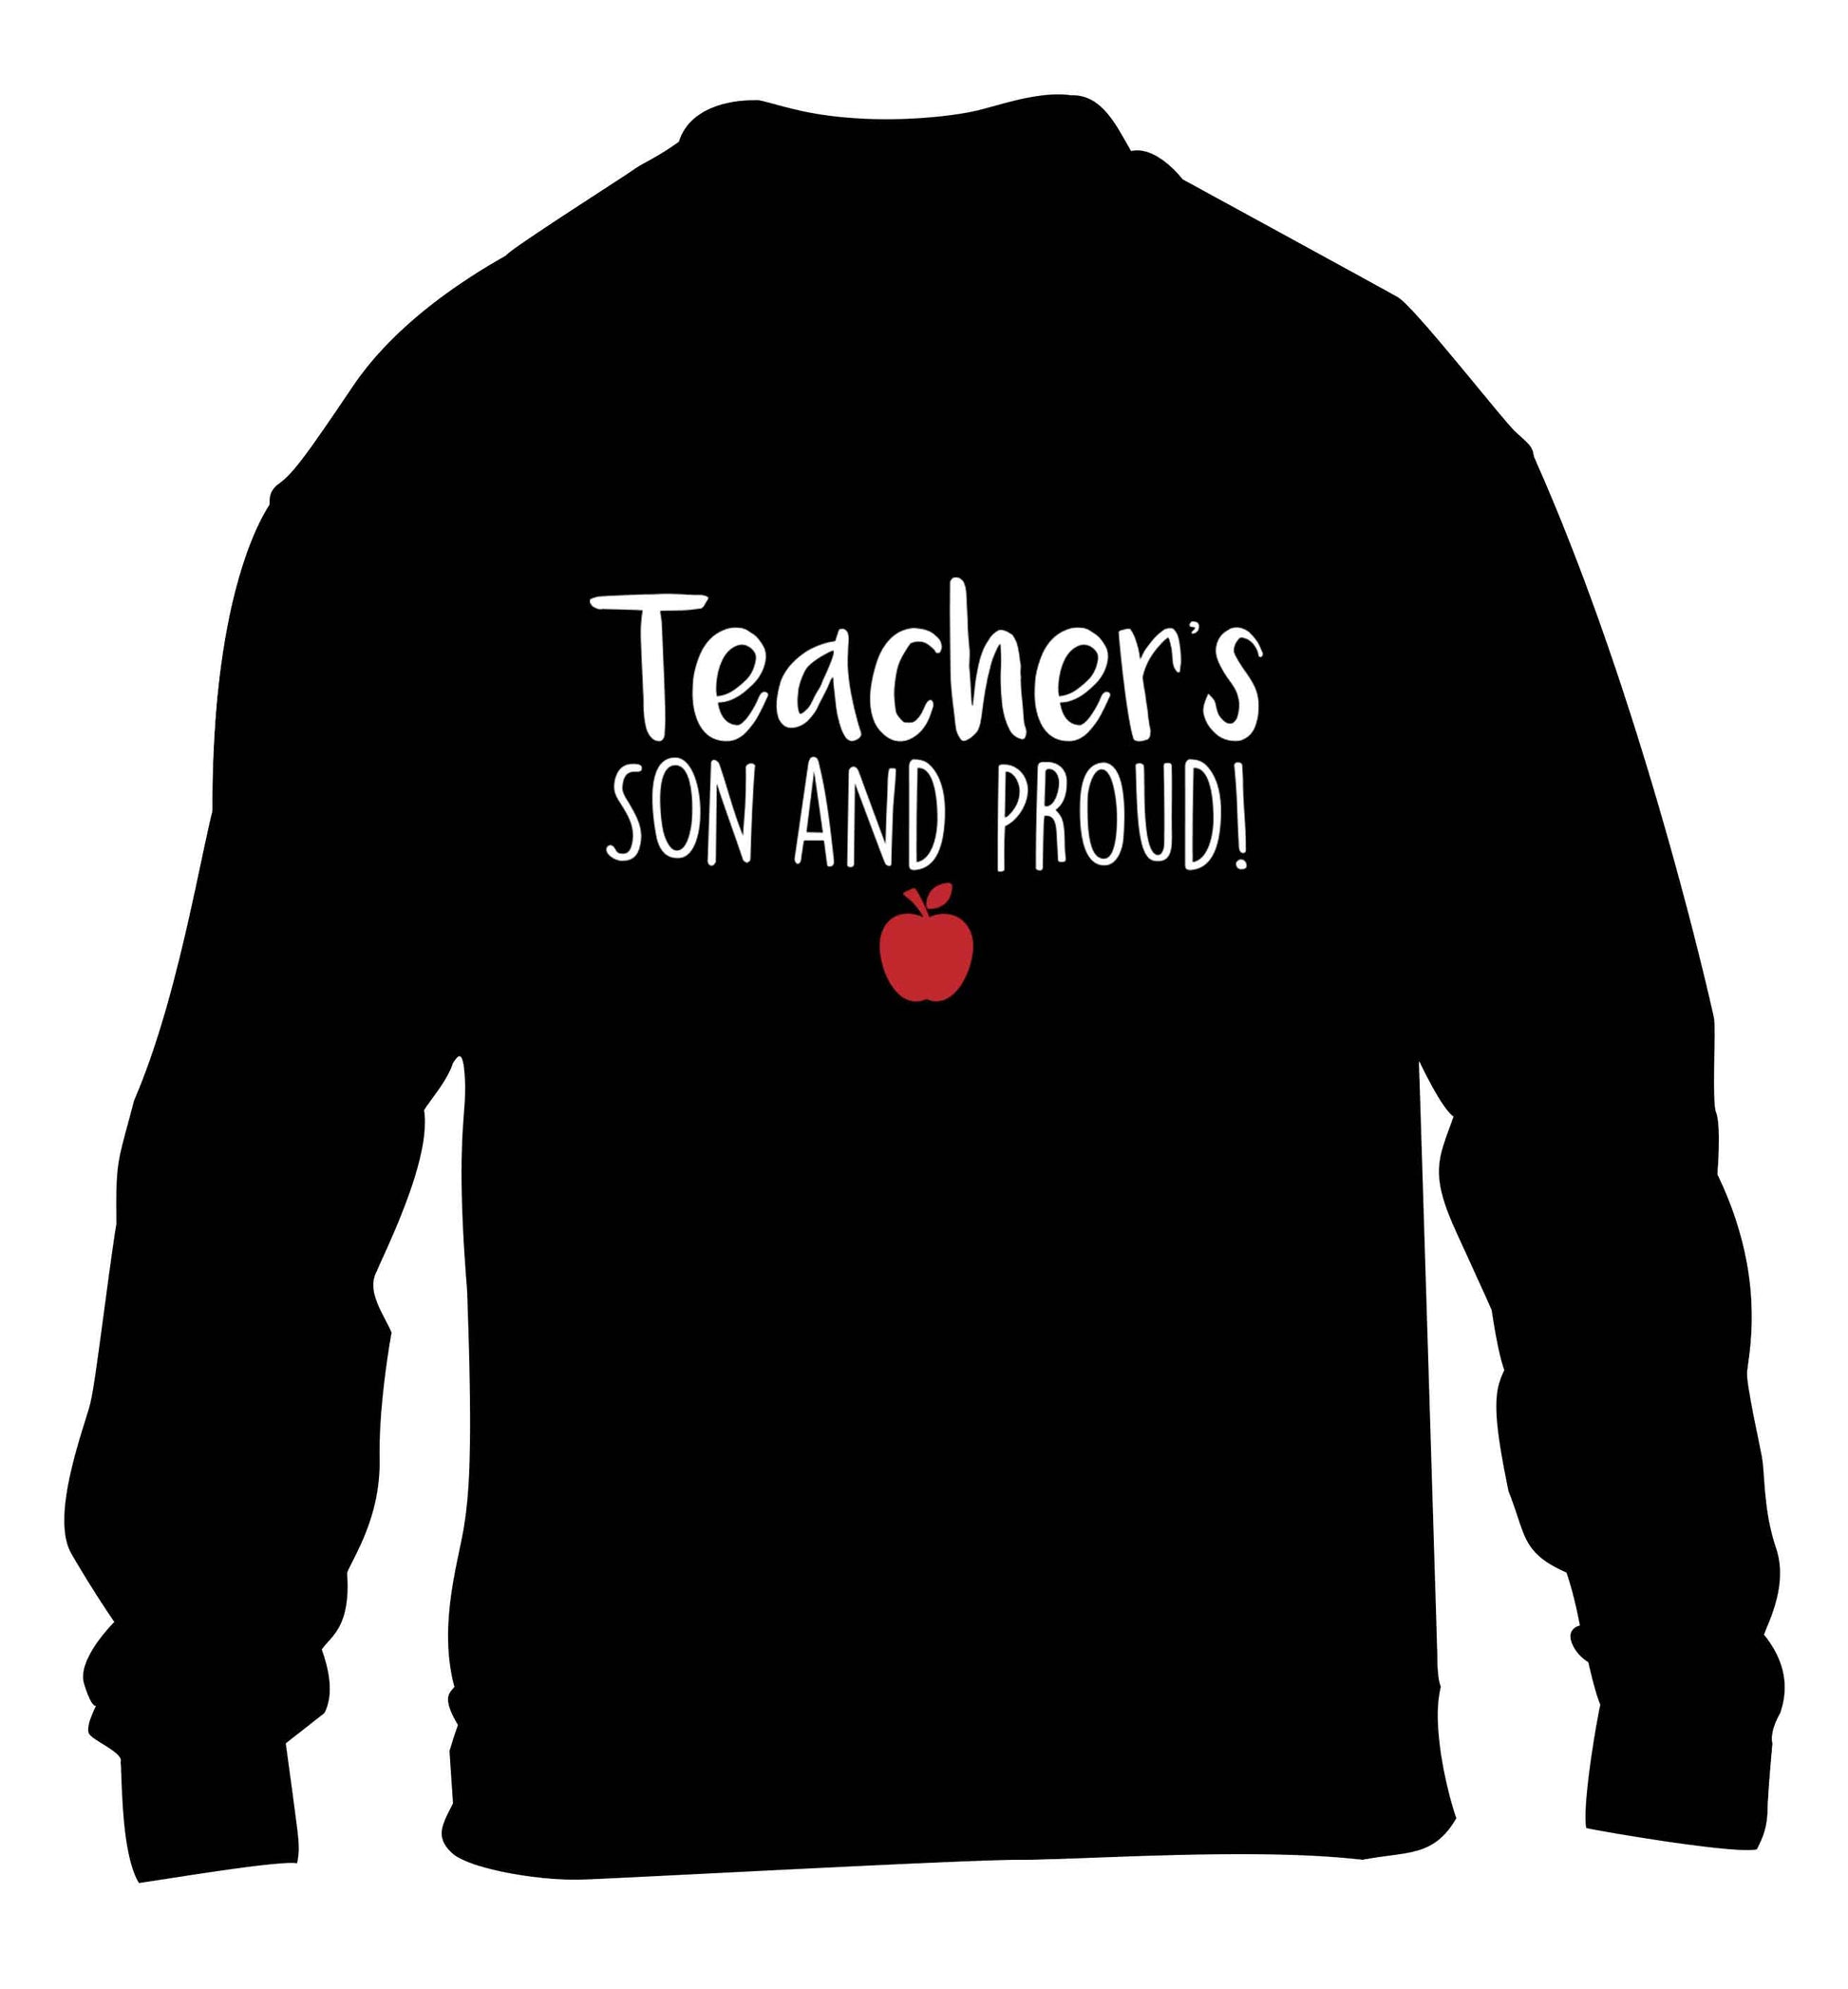 Teachers son and proud children's black sweater 12-13 Years